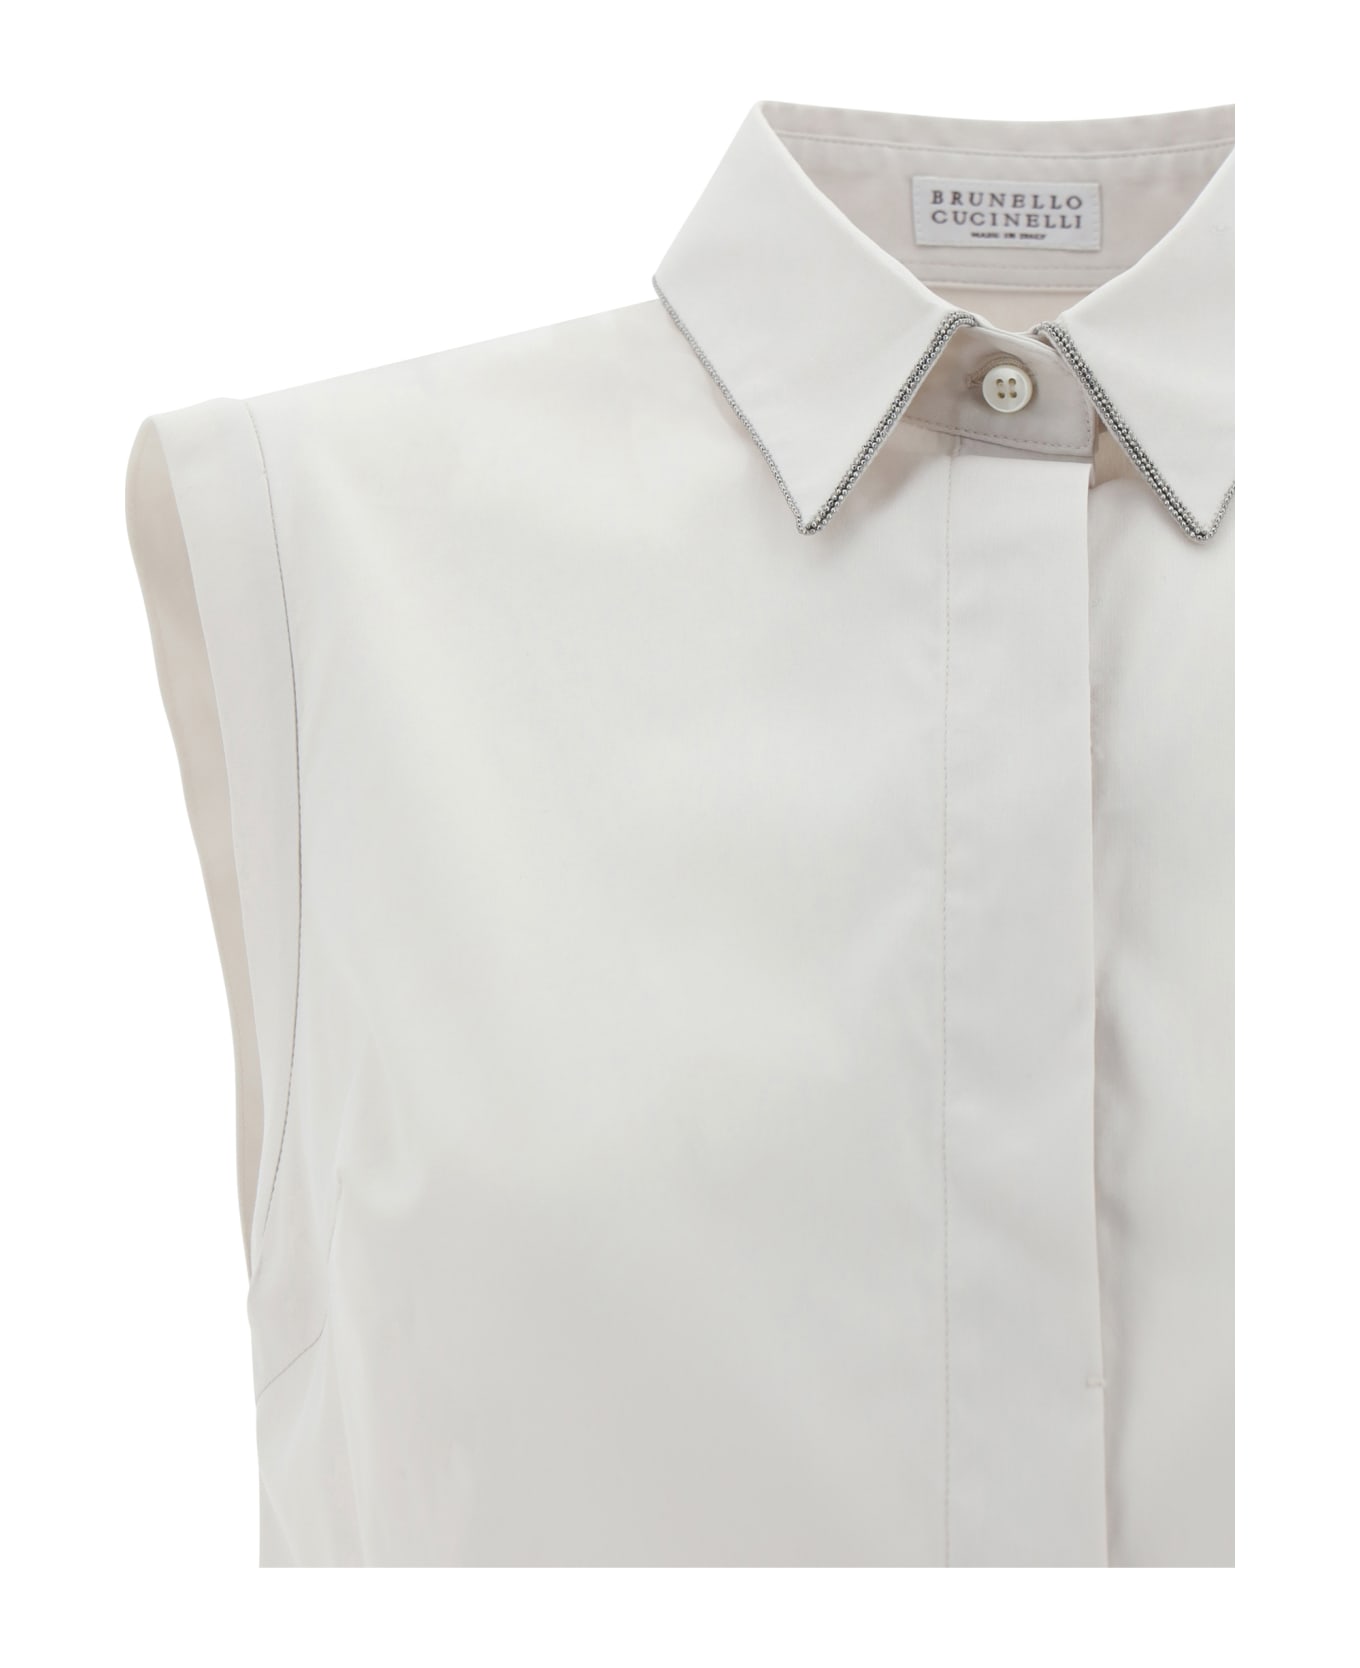 Brunello Cucinelli Sleeveless Shirt With Monili Details - White シャツ